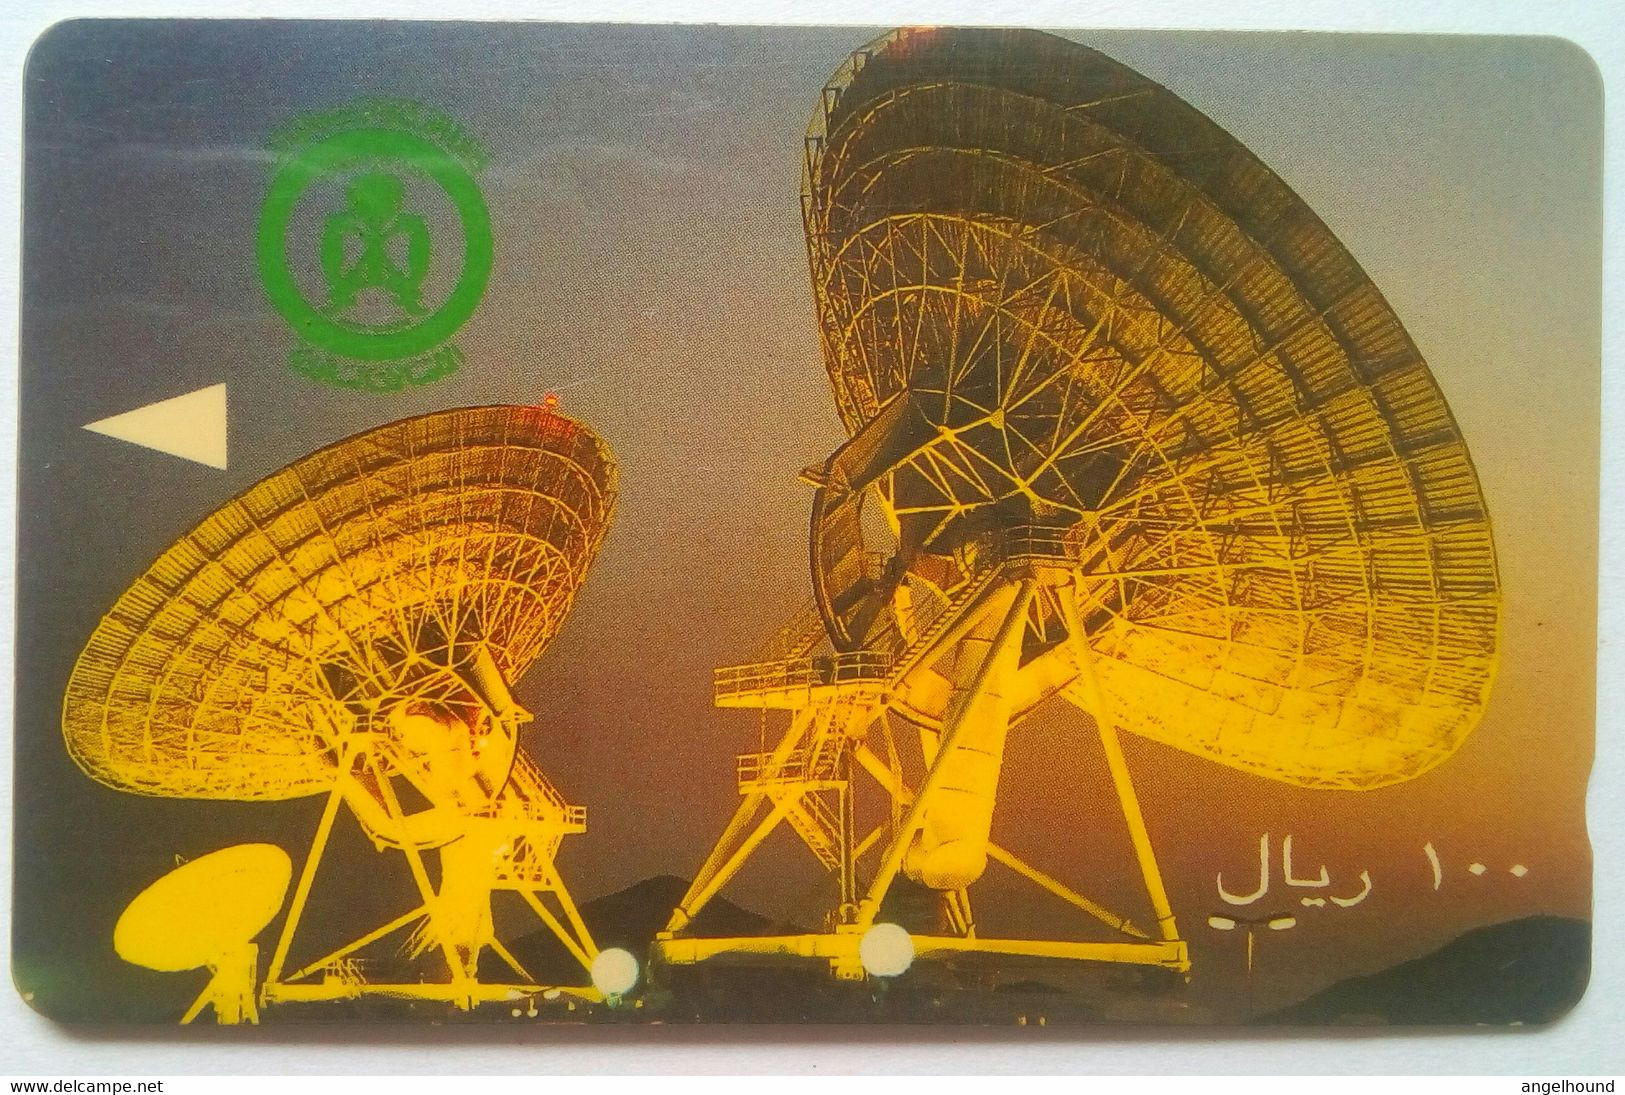 SAUDE 100 Riyals  Satellite Dish - Arabia Saudita